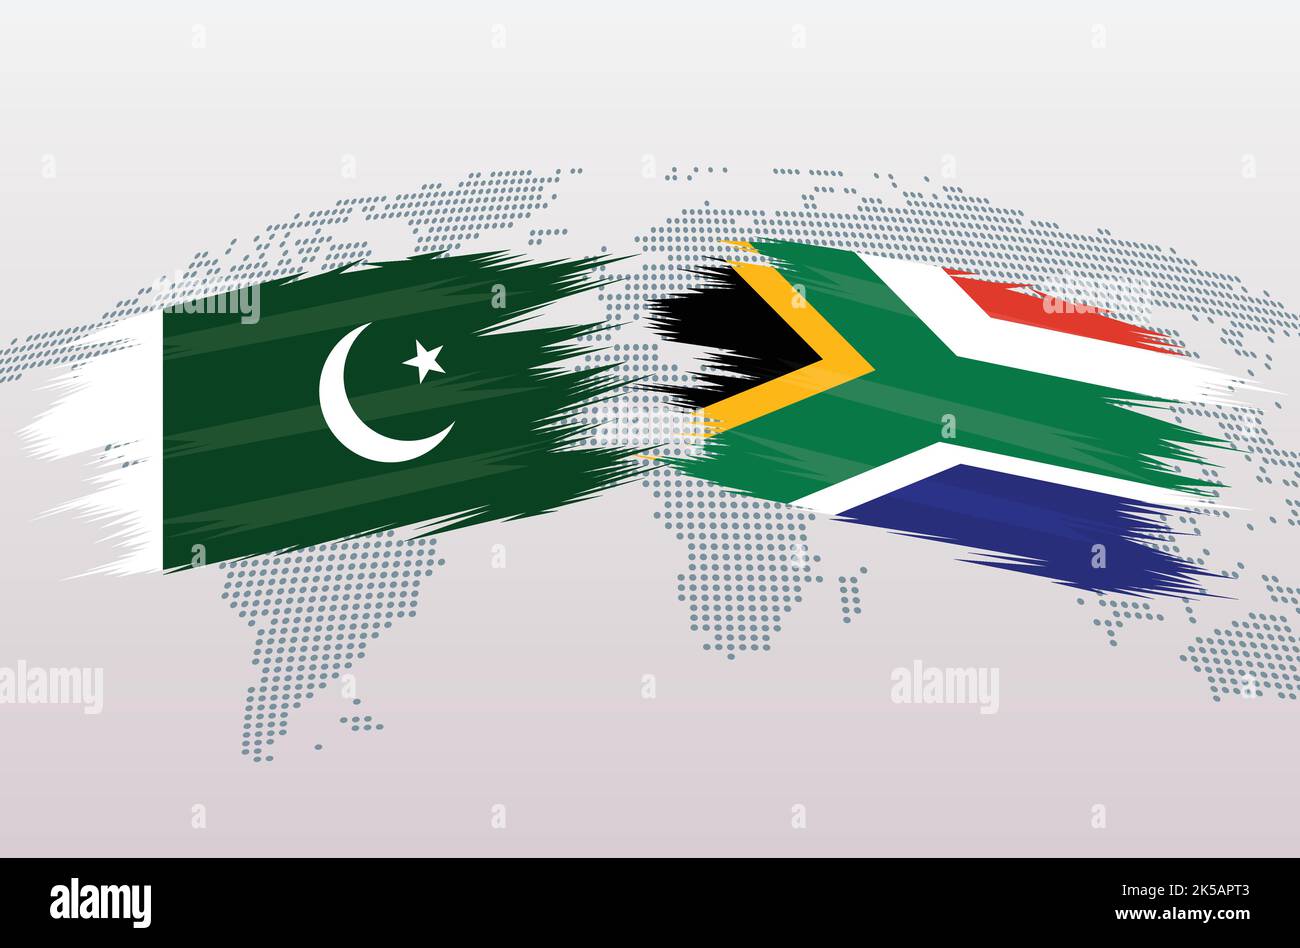 Banderas DE PAKISTÁN VS SUDÁFRICA. República Islámica del Pakistán VS banderas sudafricanas, aisladas sobre fondo gris del mapa mundial. Ilustración vectorial. Ilustración del Vector